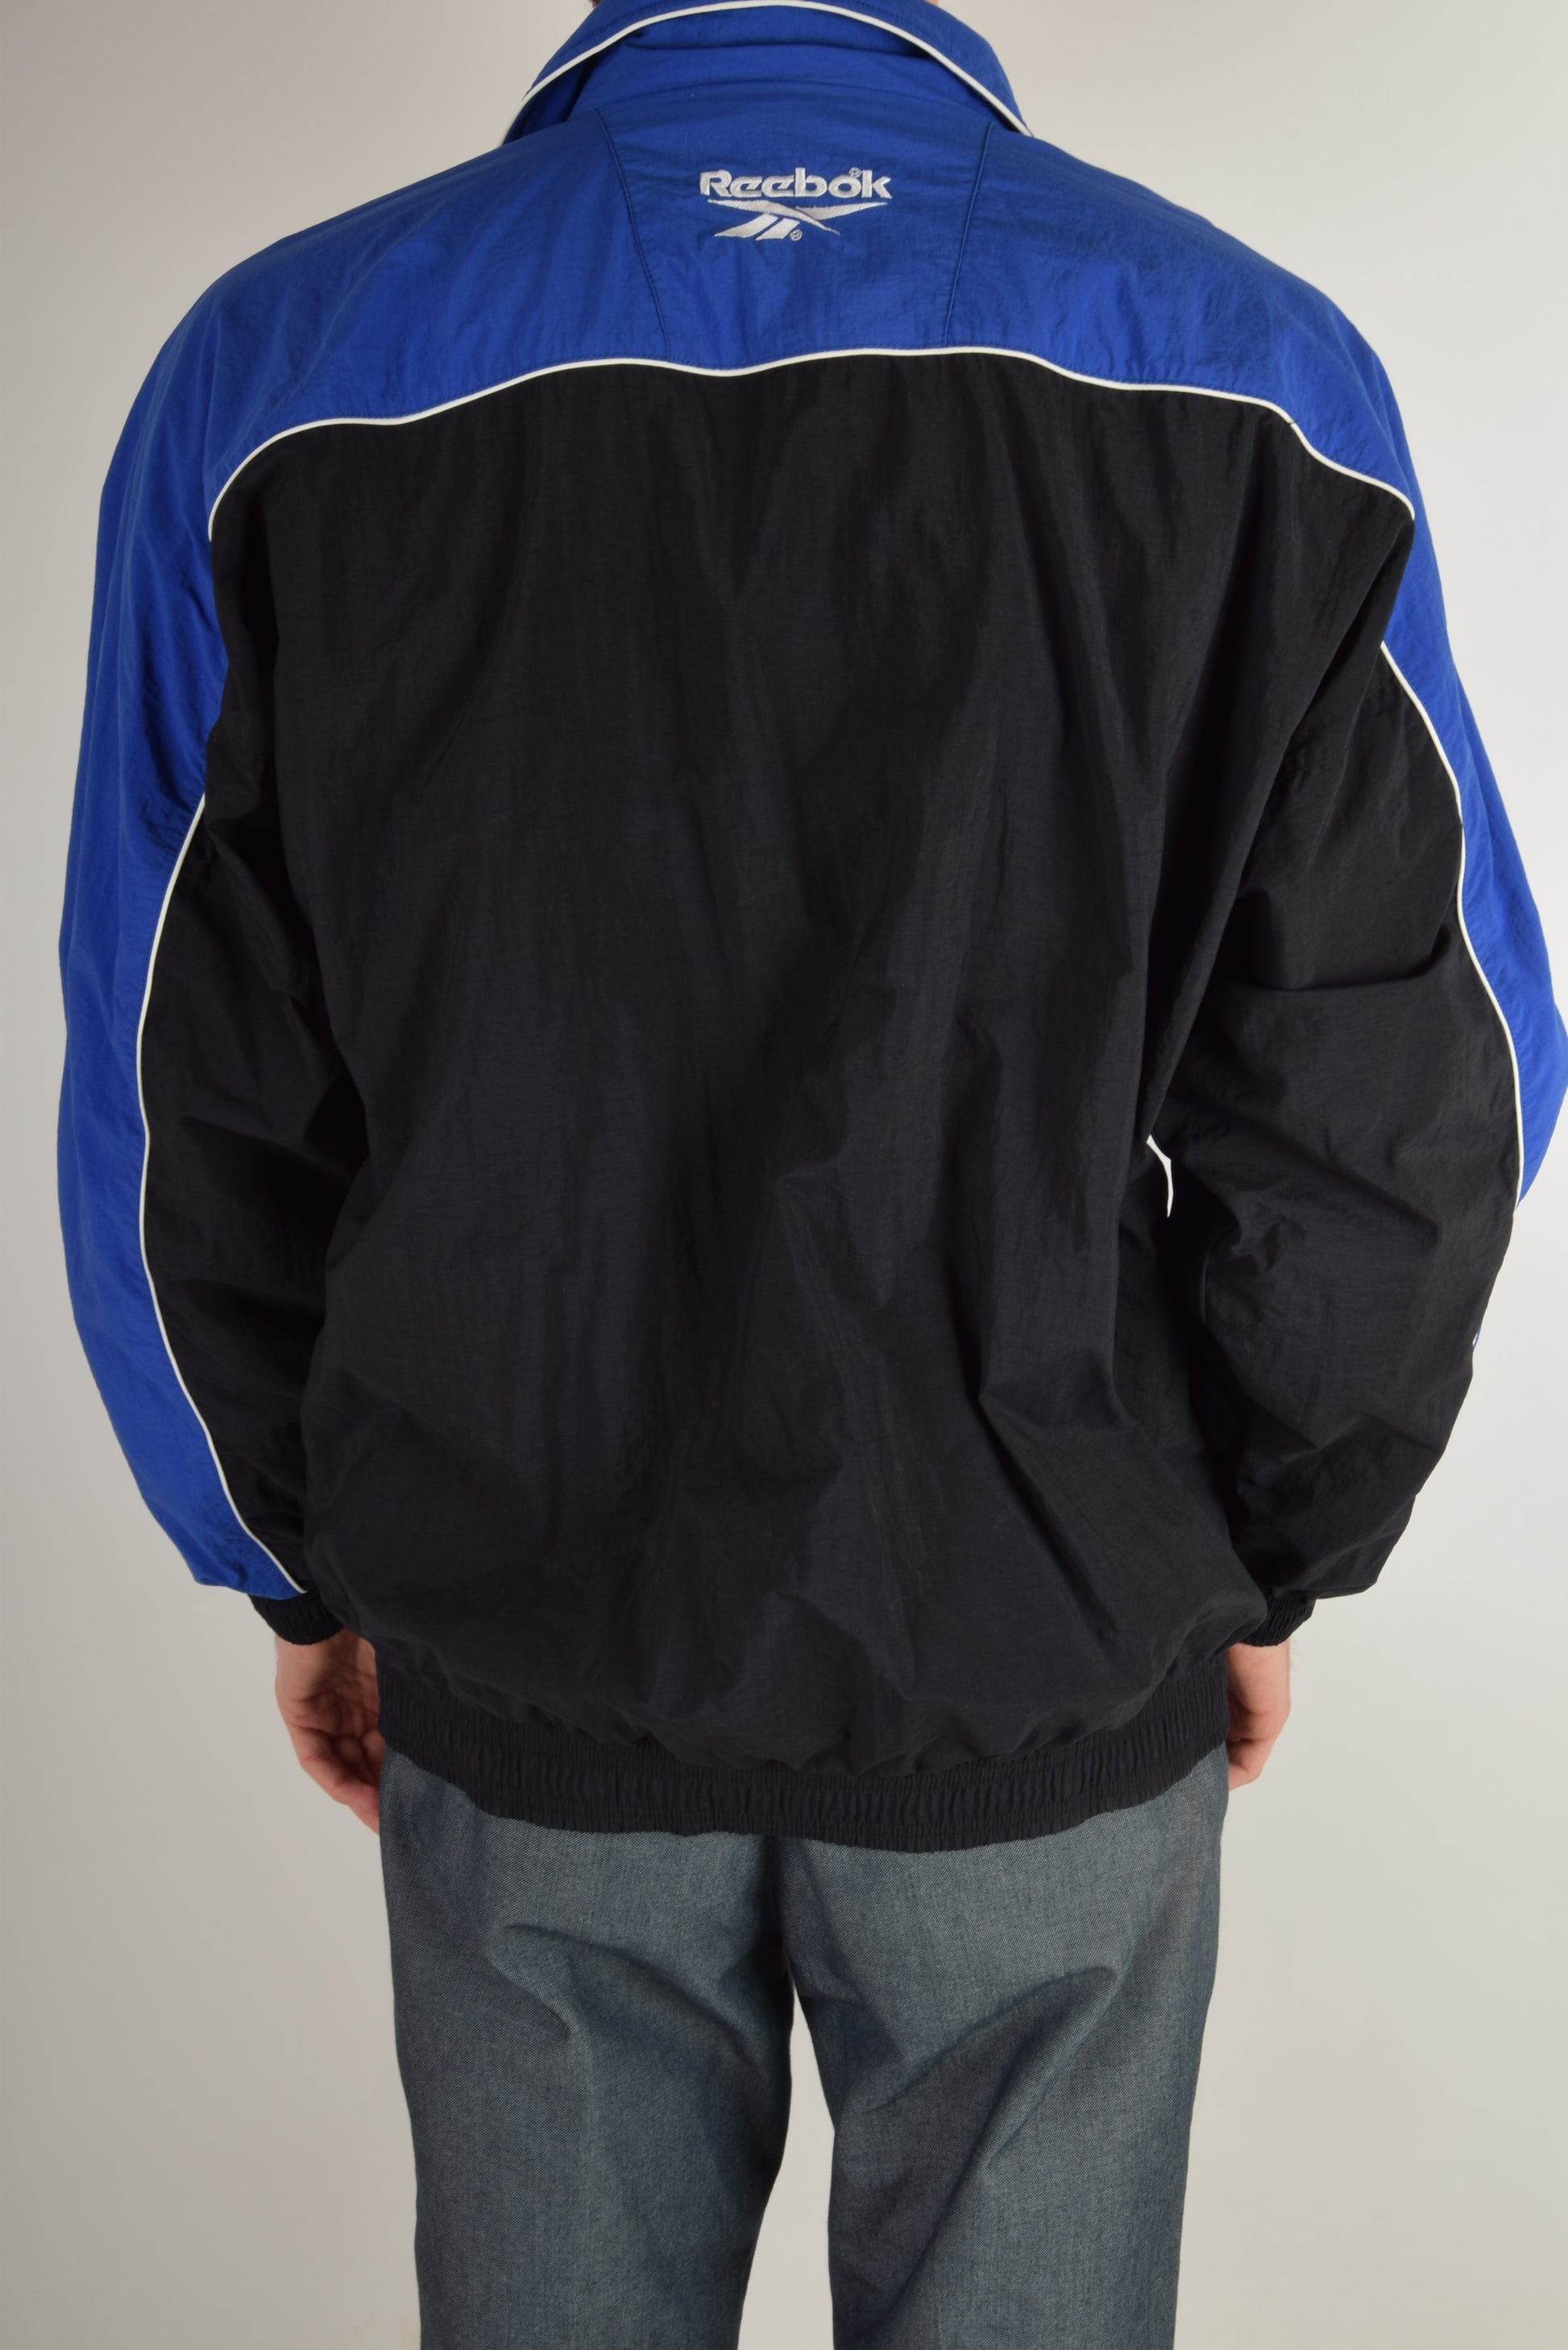 Vintage Reebok Jacket Size L 90's